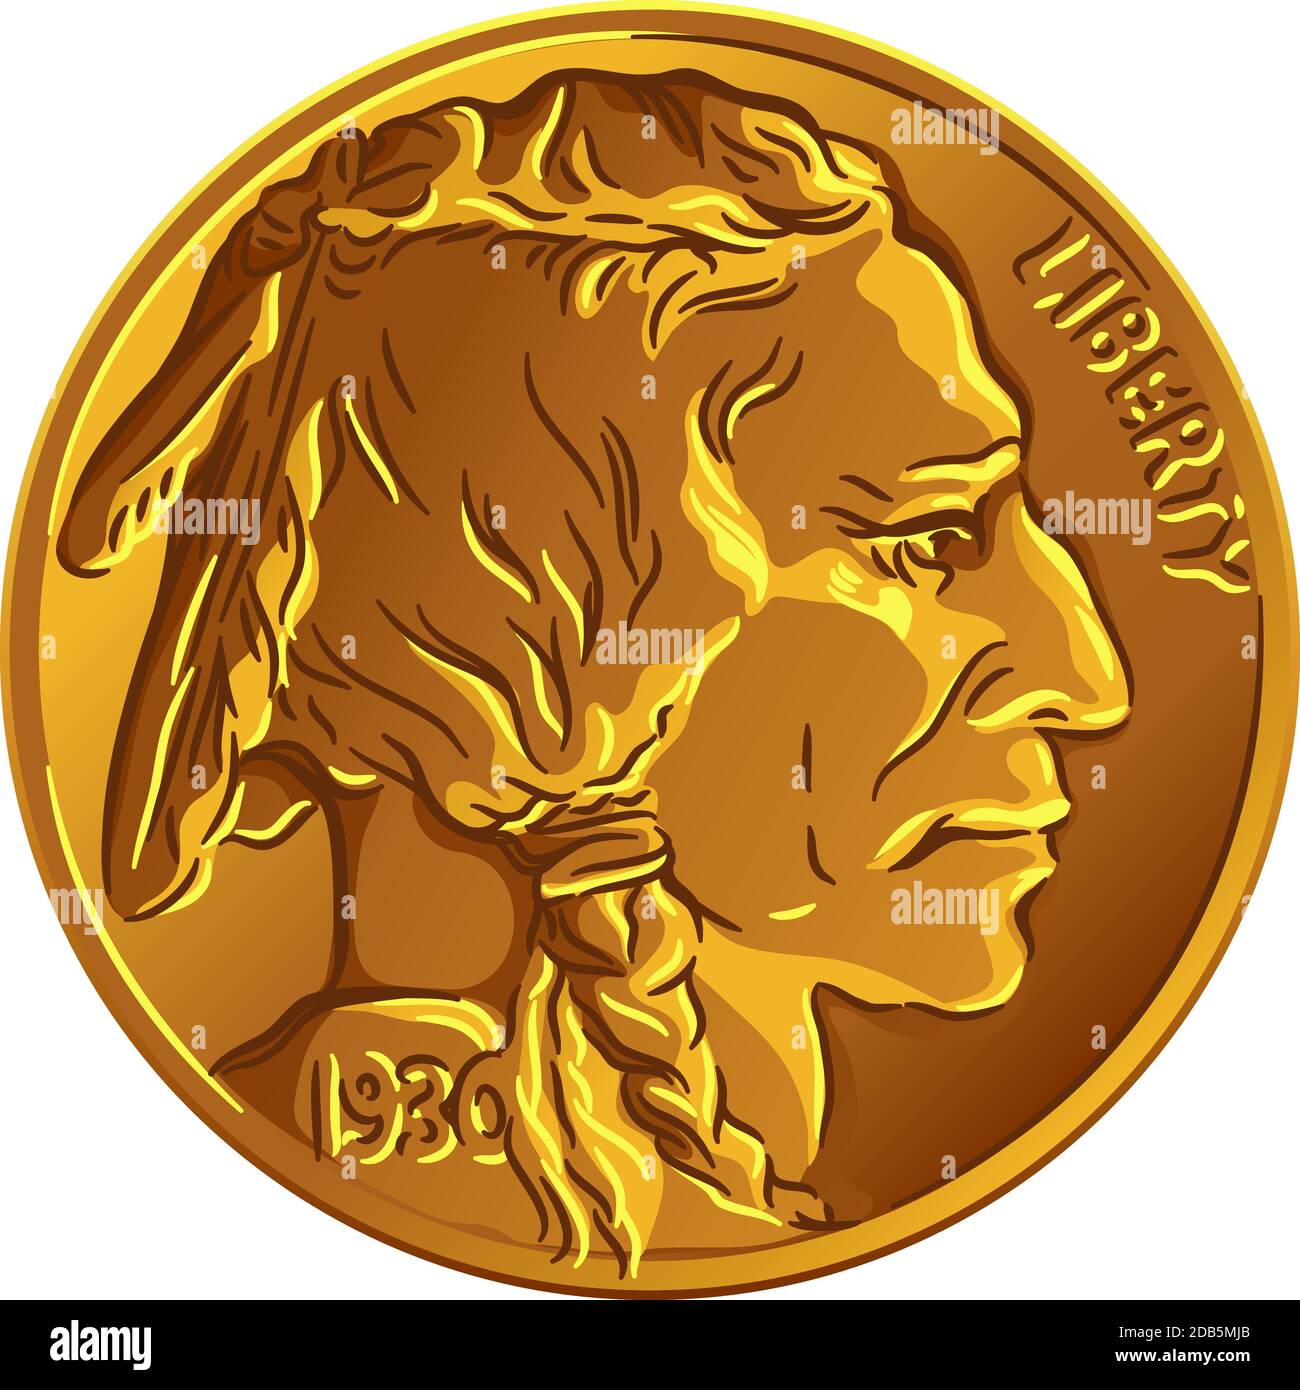 American copper-nickel money, Obverse of Buffalo nickel or Indian Head nickel 5 Cent Coin Stock Vector